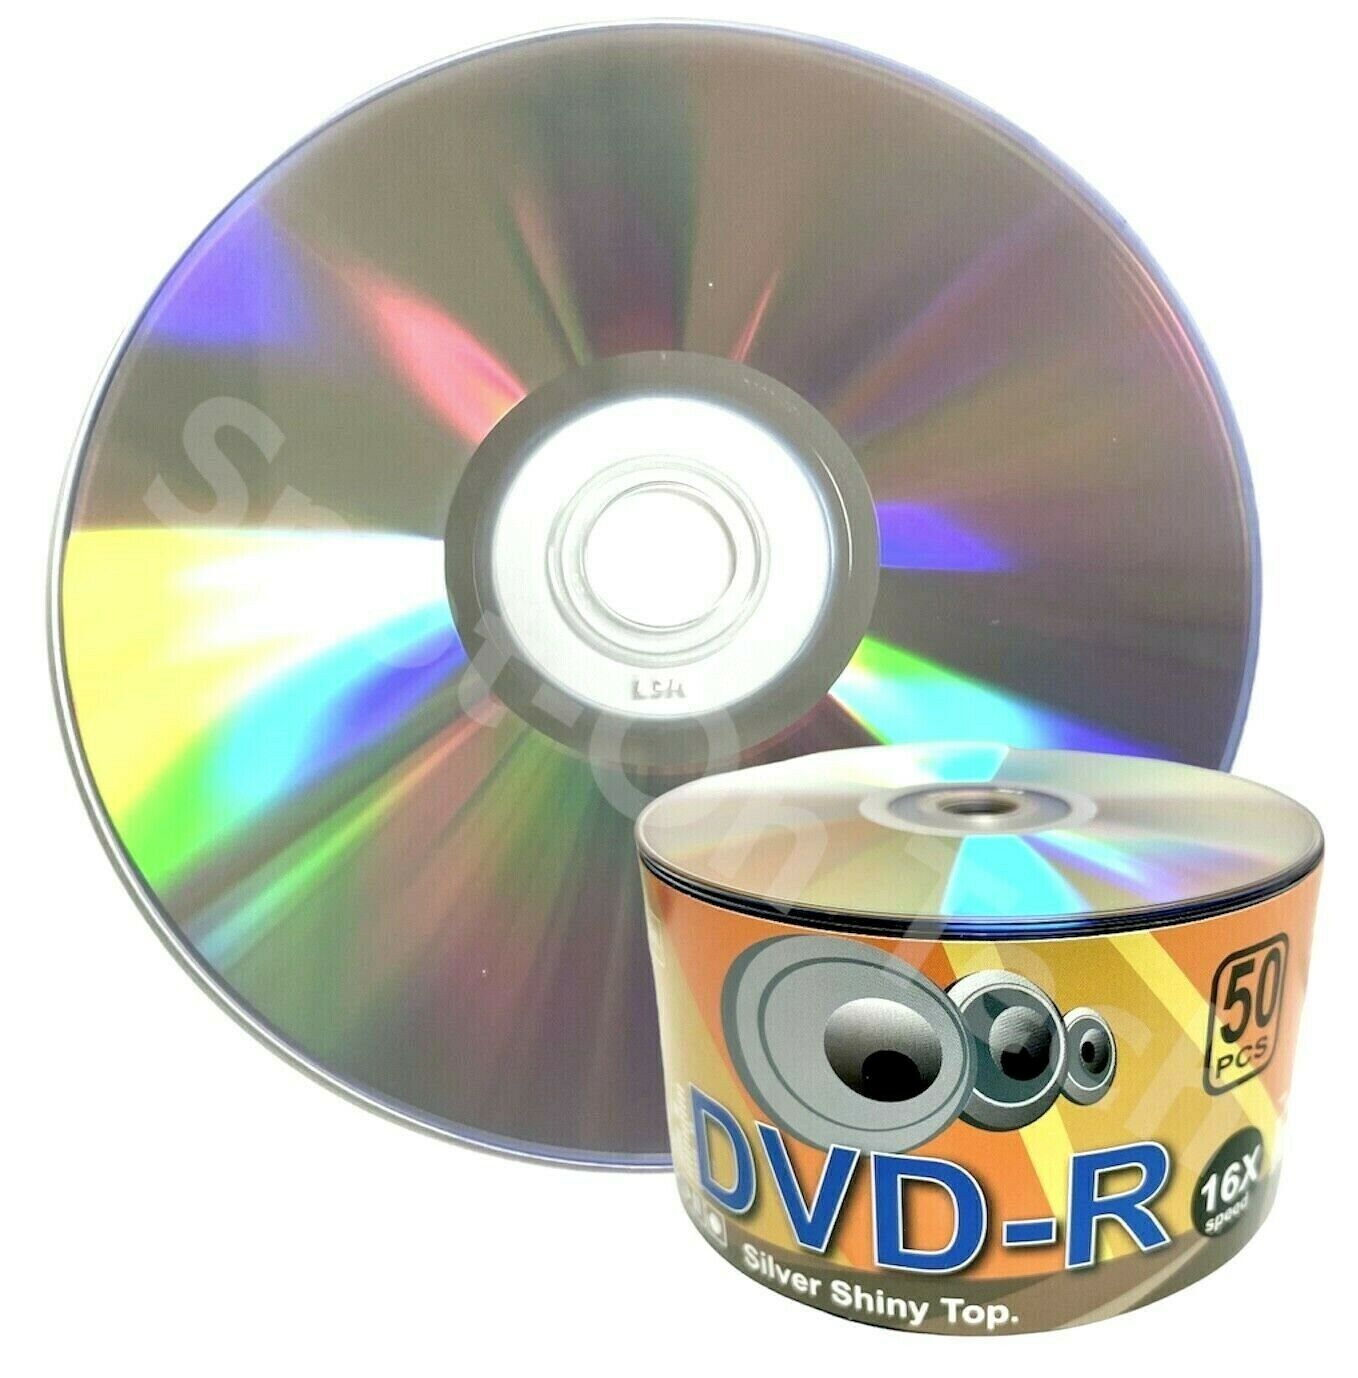 50 LSK DVD DVD-R Silver Shiny Blank Disc 16X 4.7GB/120Min Duplication Grade 